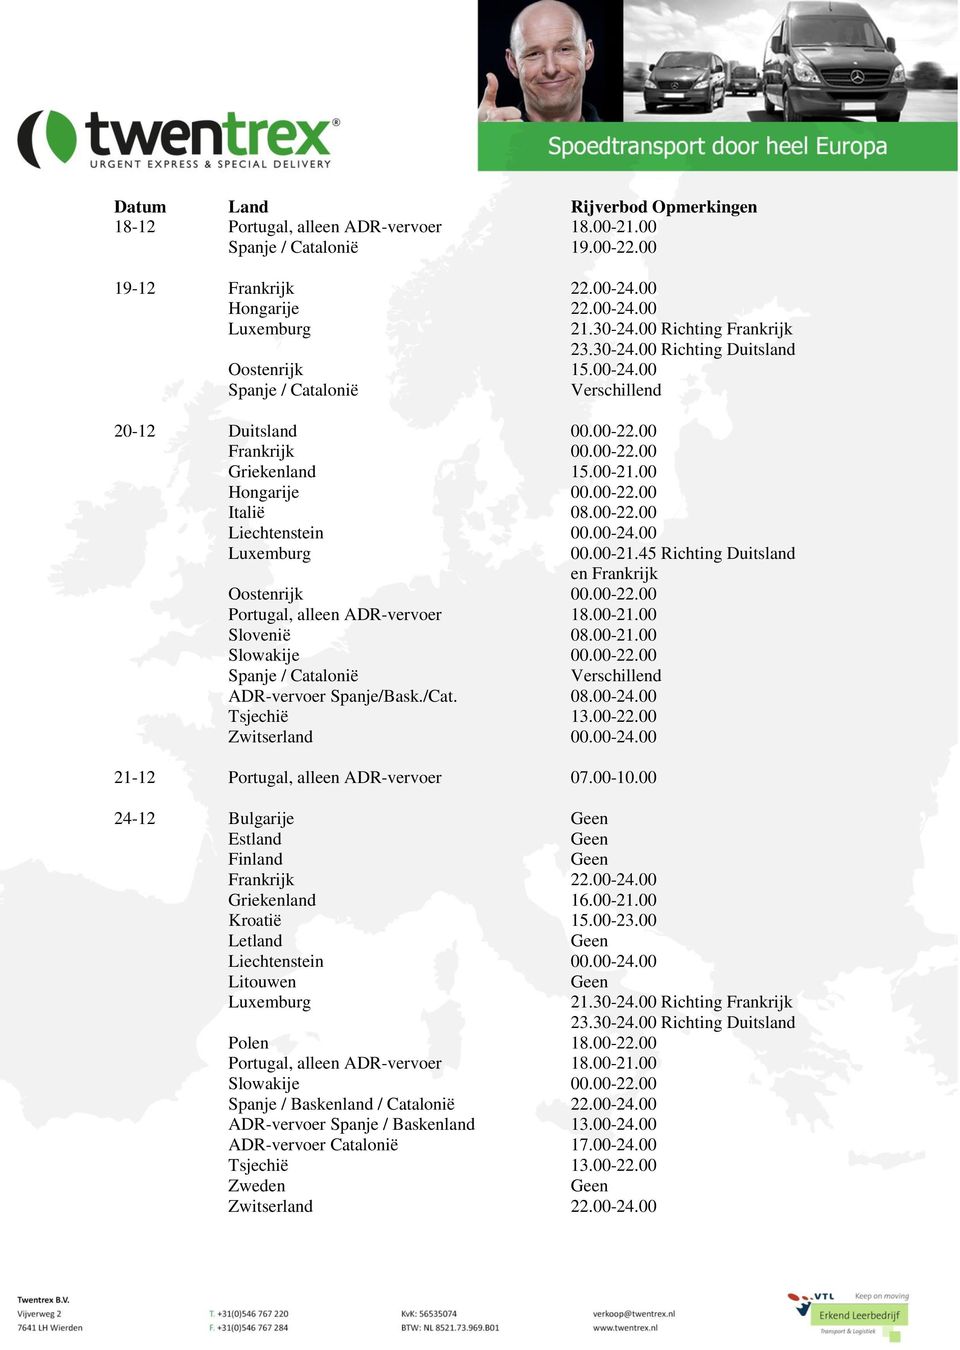 00 24-12 Bulgarije Estland Finland Frankrijk 22.00-24.00 Griekenland 16.00-21.00 Kroatië 15.00-23.